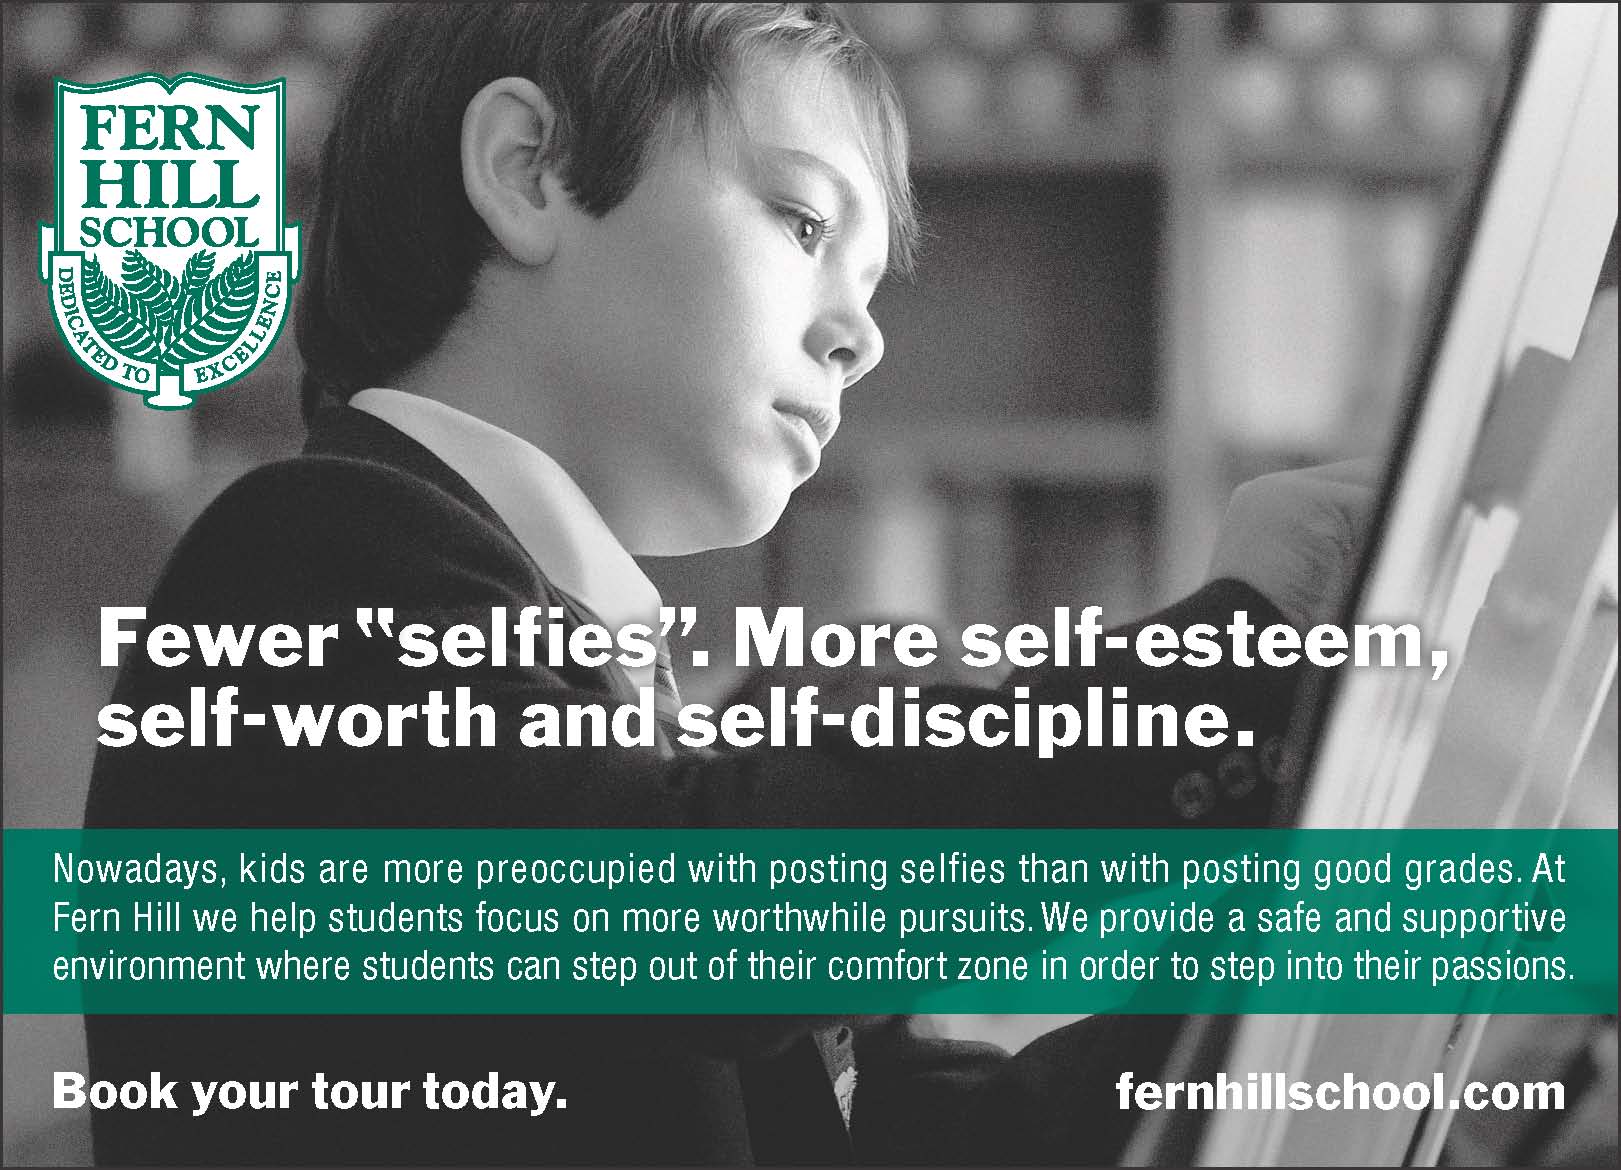 Fern Hill _Fewer selfies_ ad.jpg